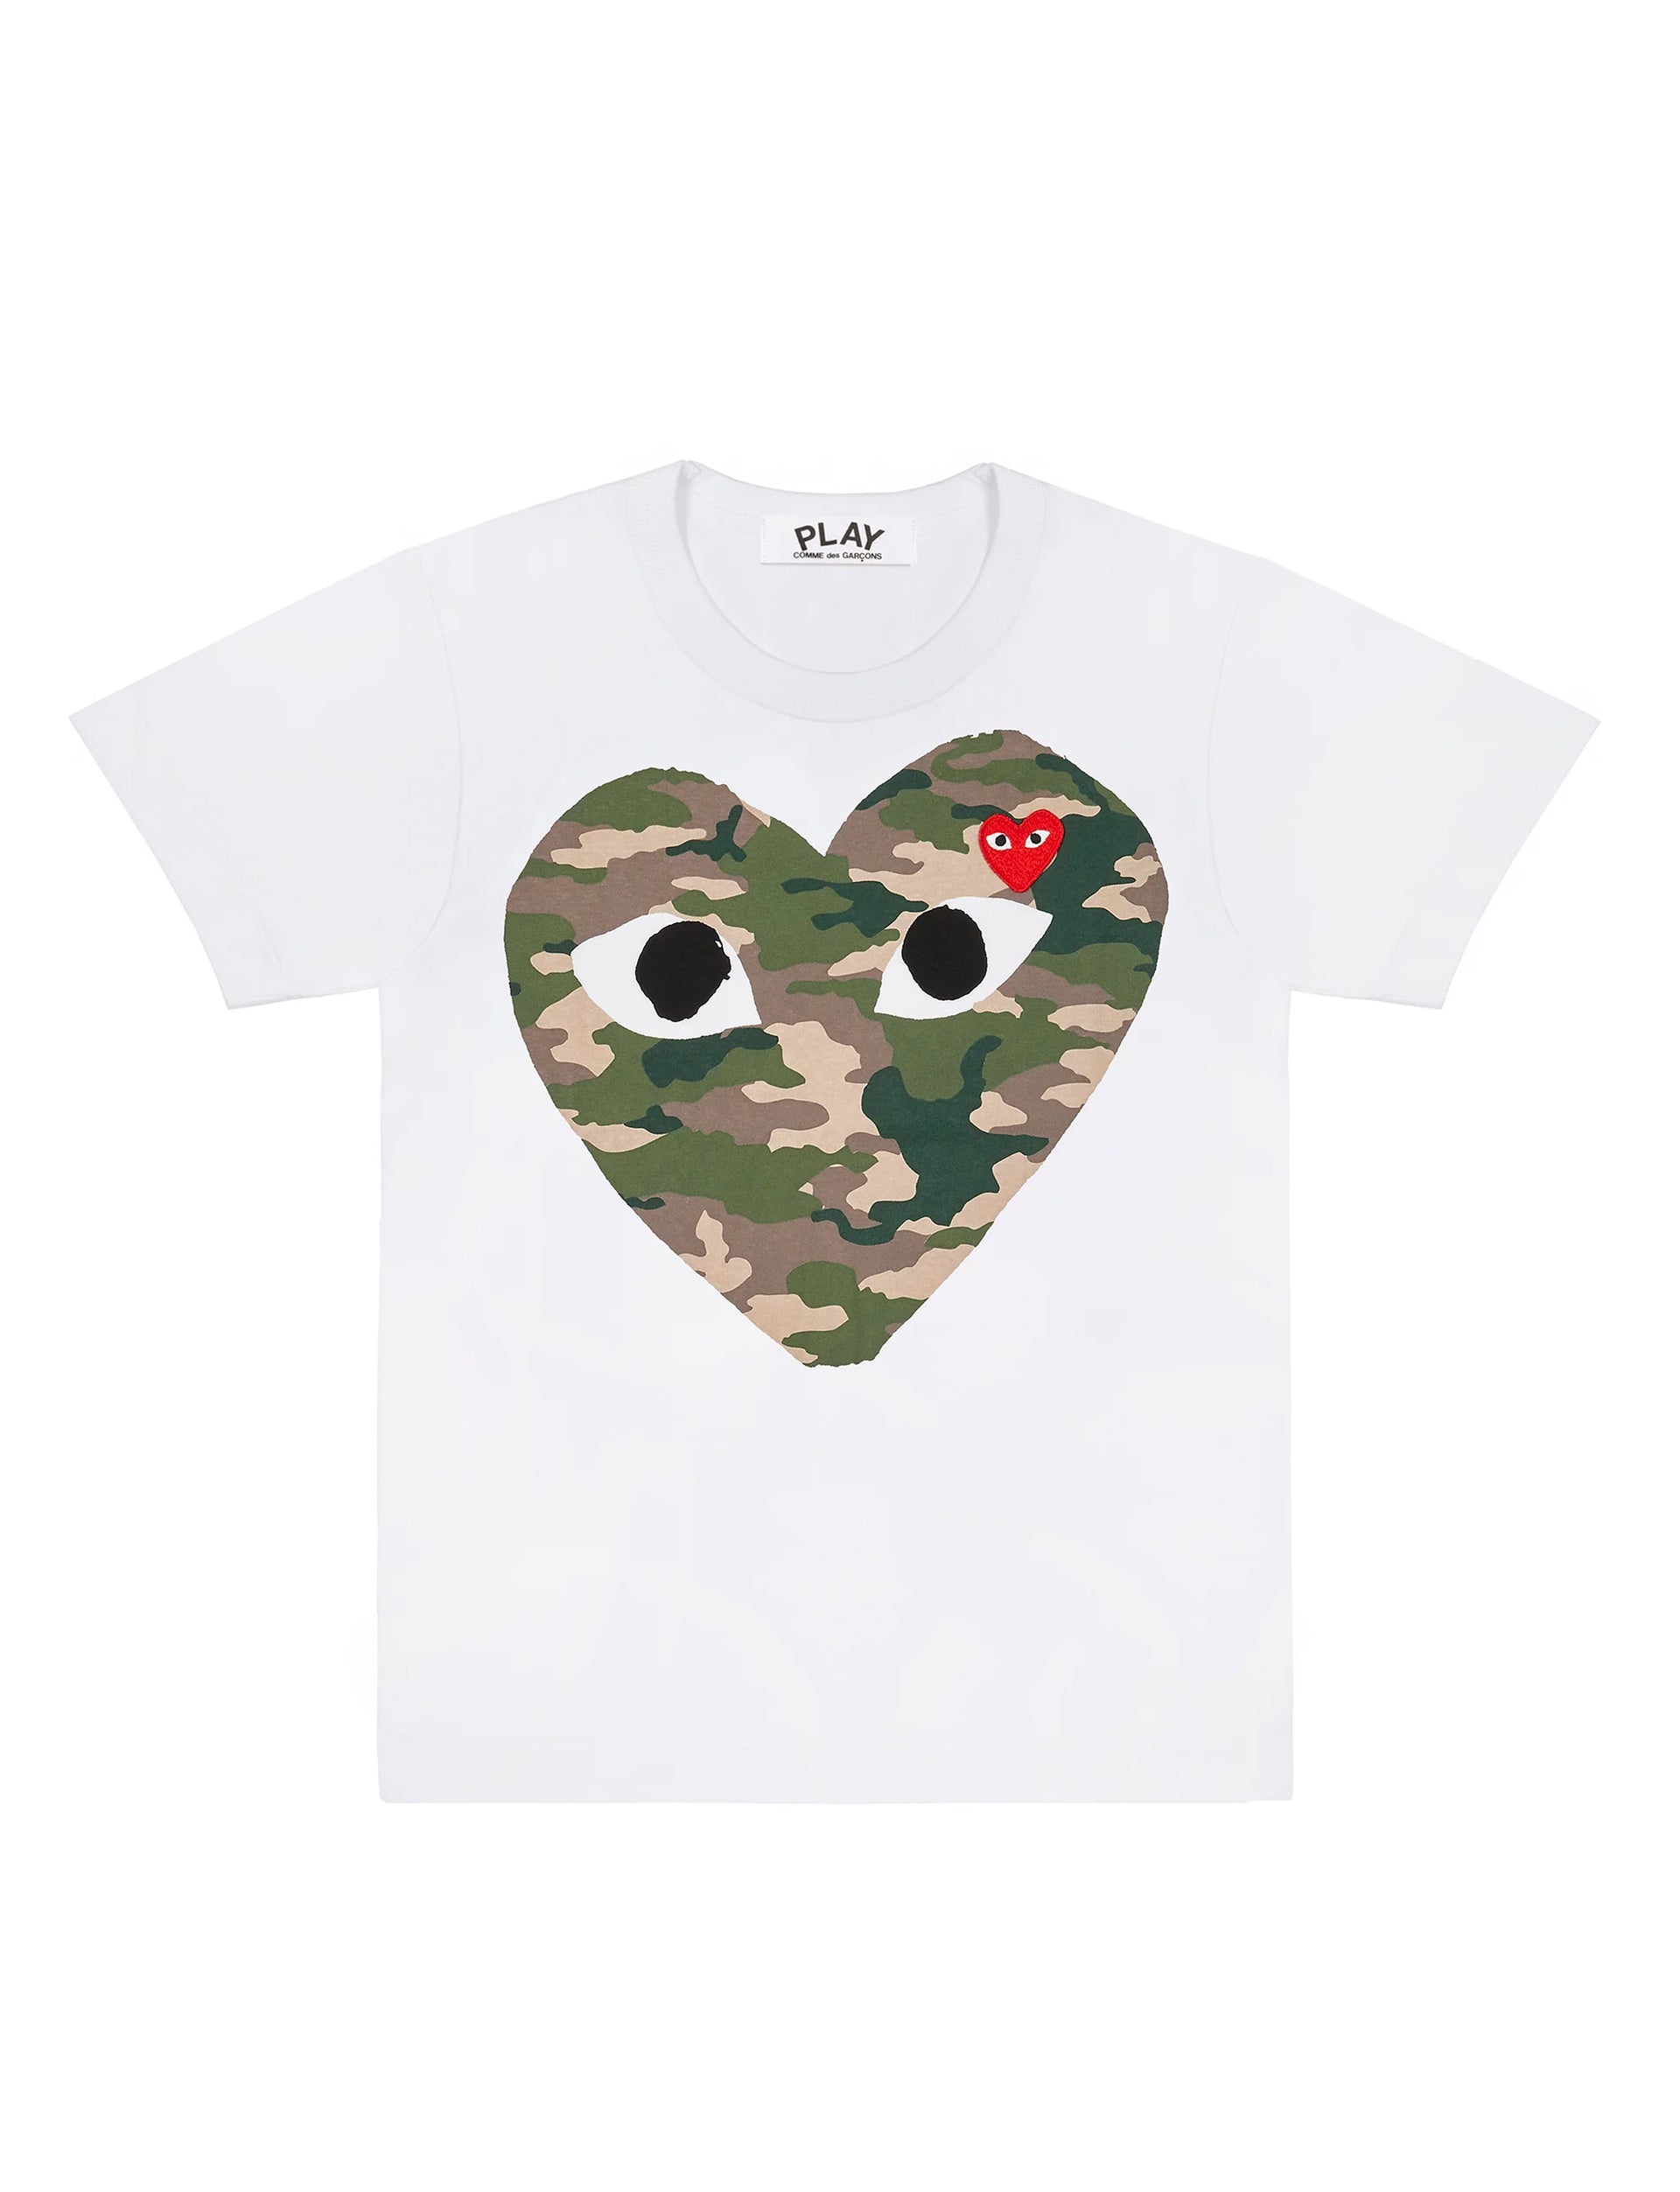 Comme des Garçons Play - Camouflage Heart T-Shirt - (White)